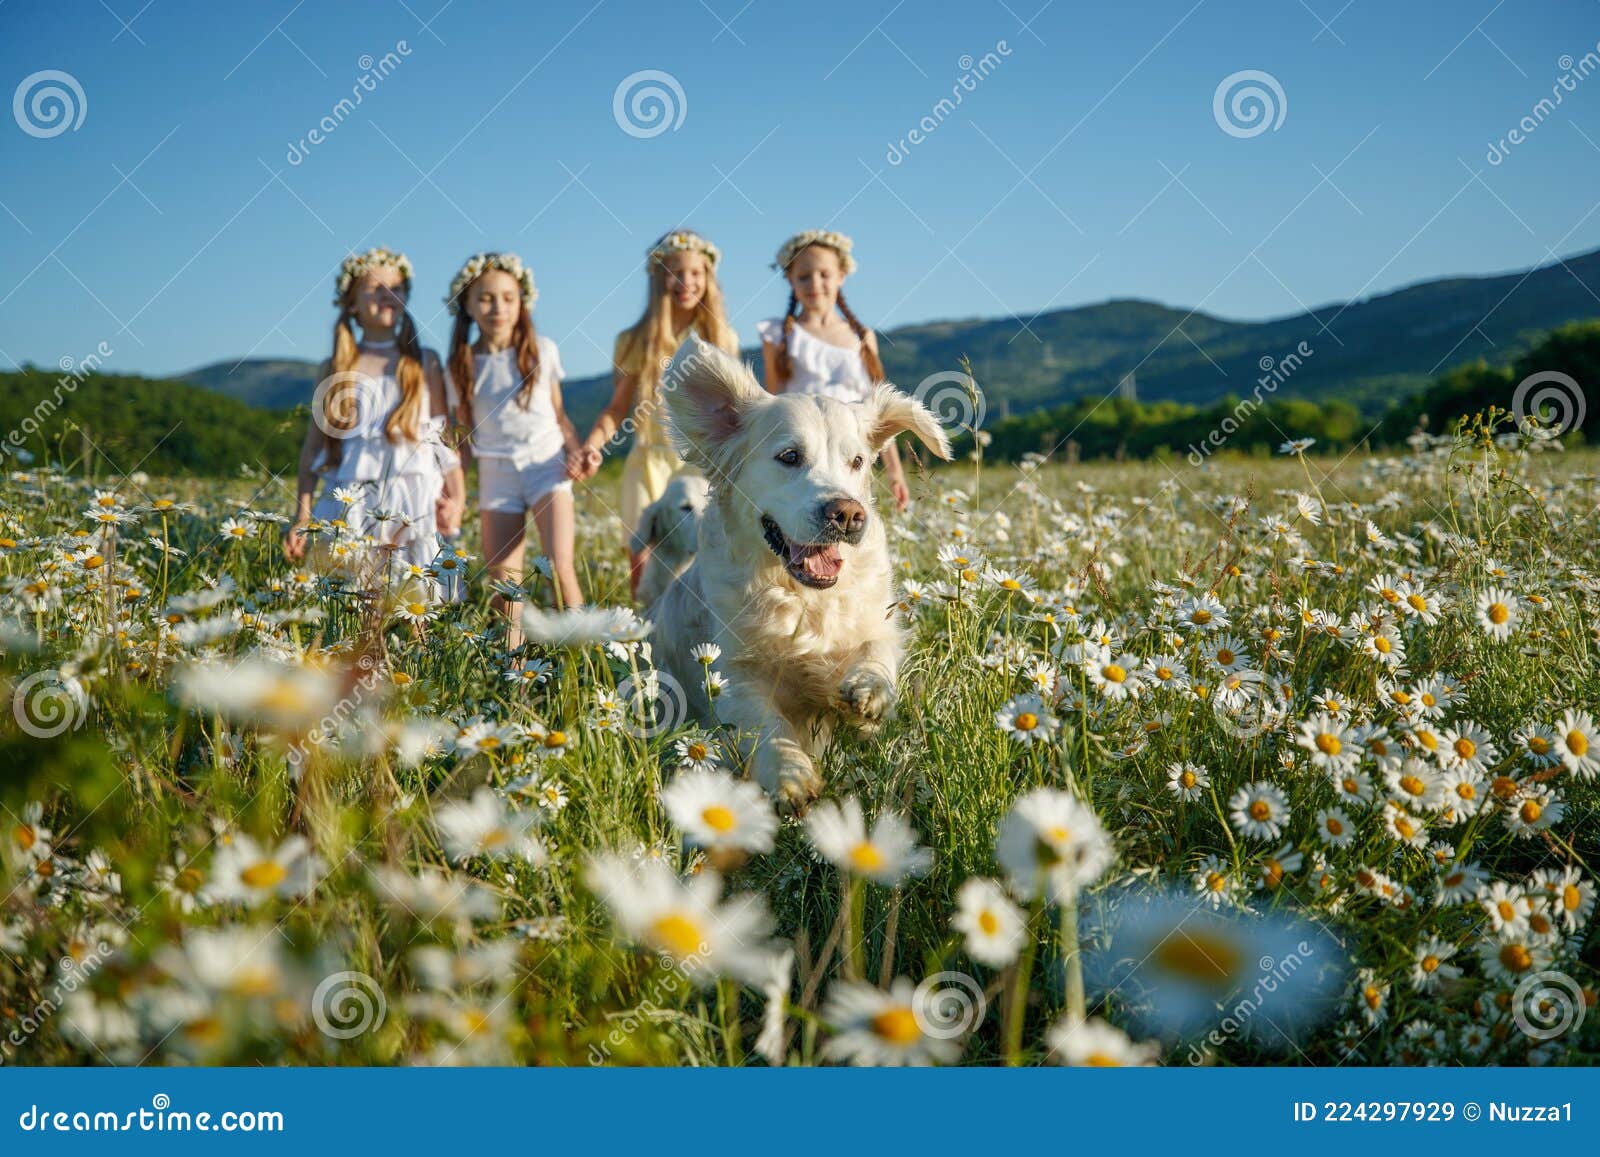 seis meninas se divertem no campo 11530705 Foto de stock no Vecteezy